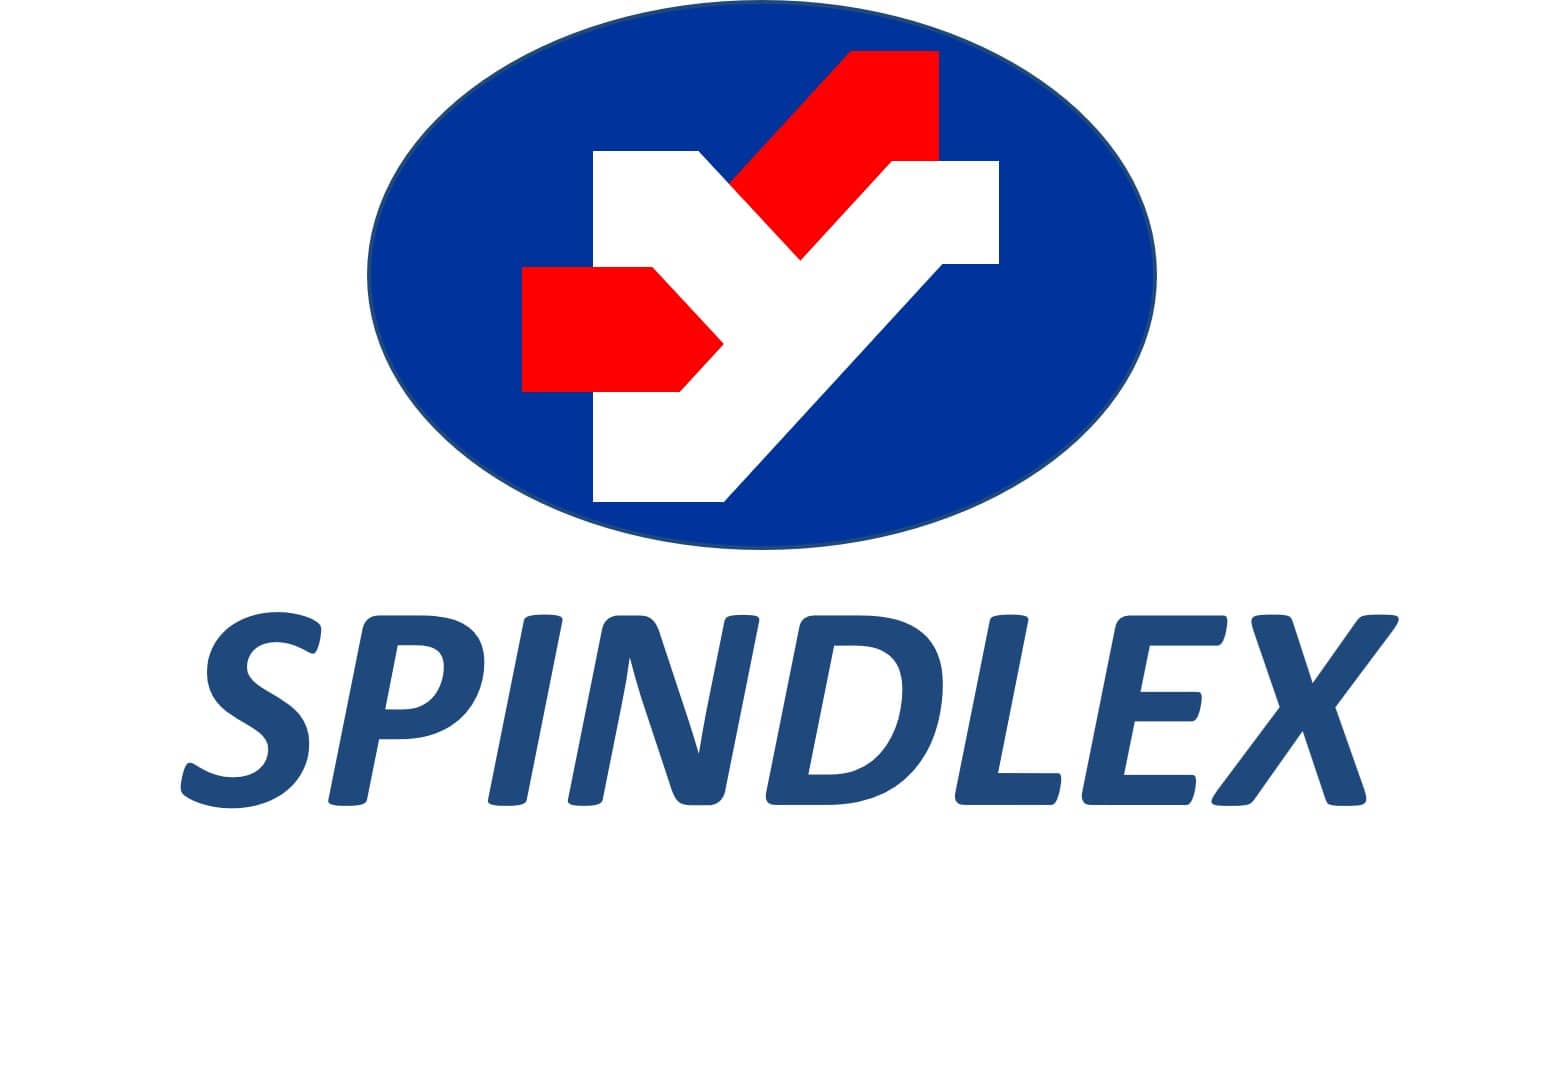 
                                SPINDLEX TECHNOLOGIES CO., LTD
                                        